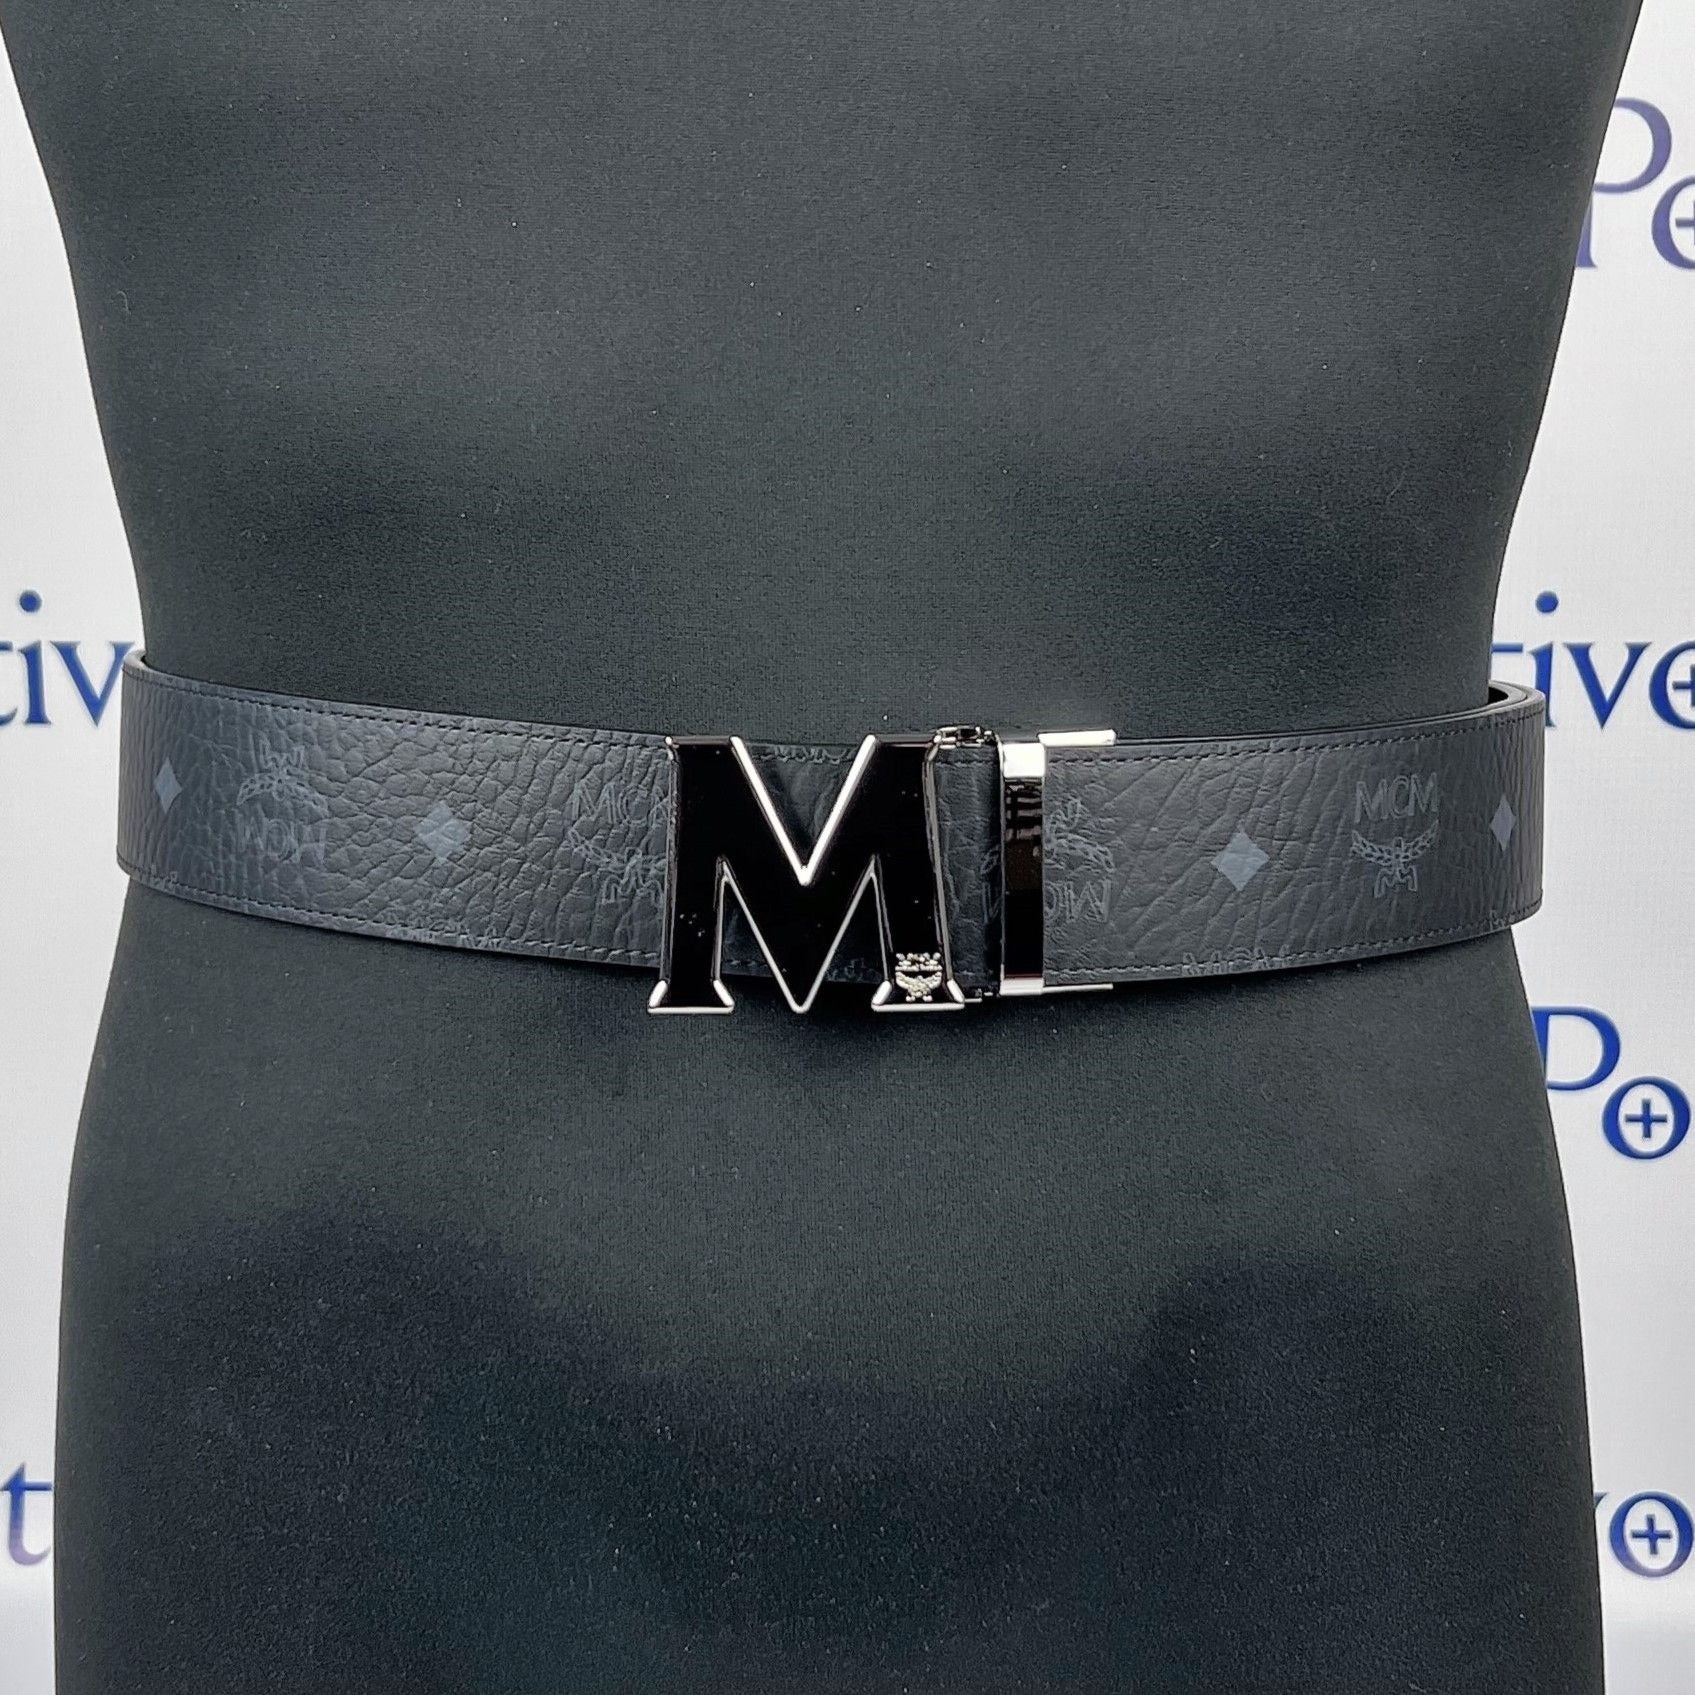 Mcm Men's Claus Reversible Belt